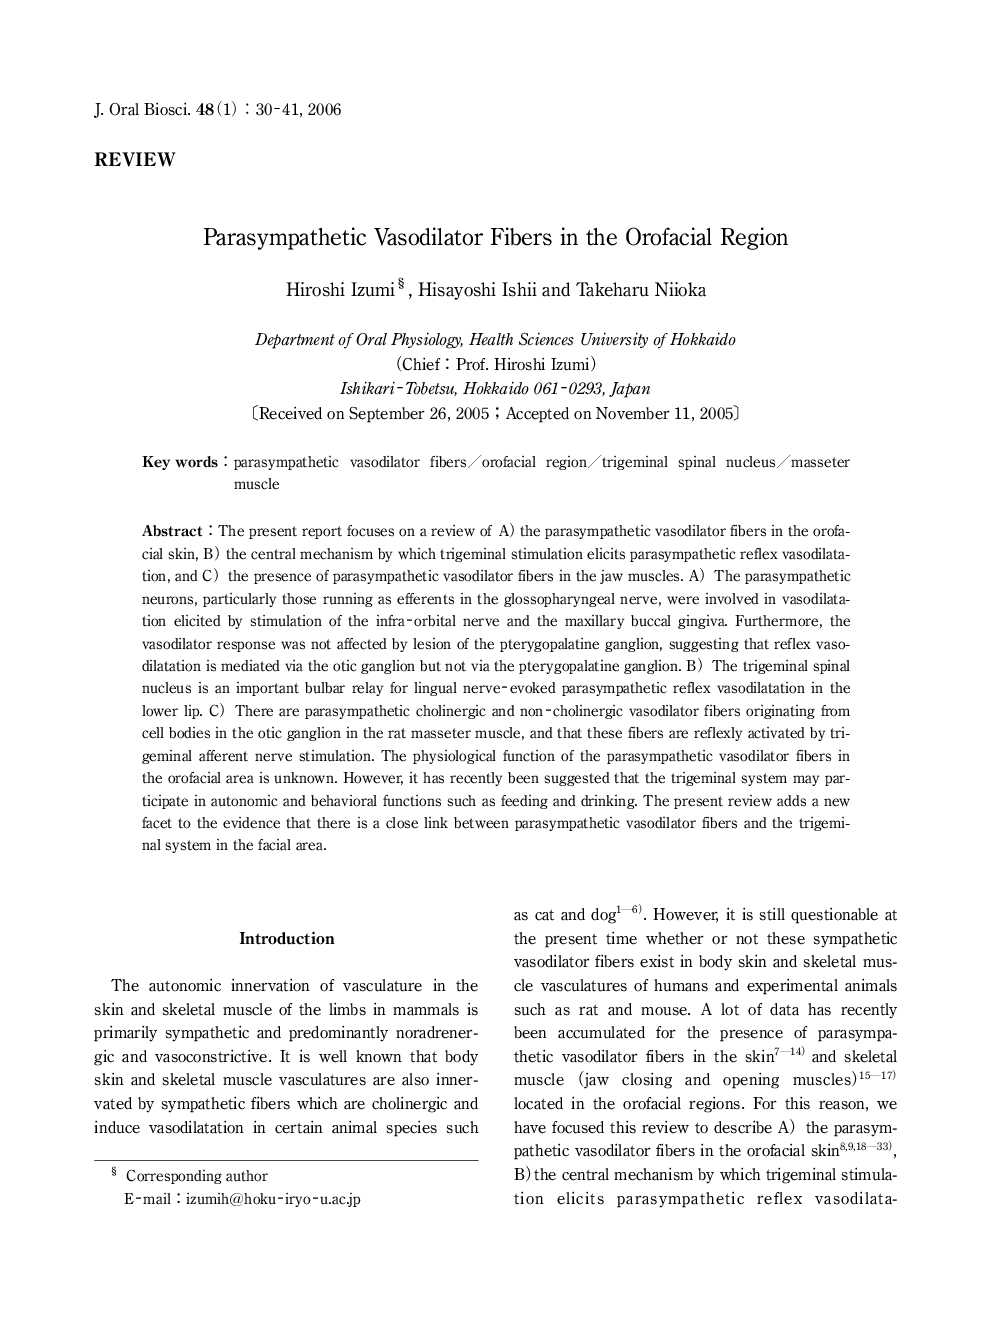 Parasympathetic Vasodilator Fibers in the Orofacial Region